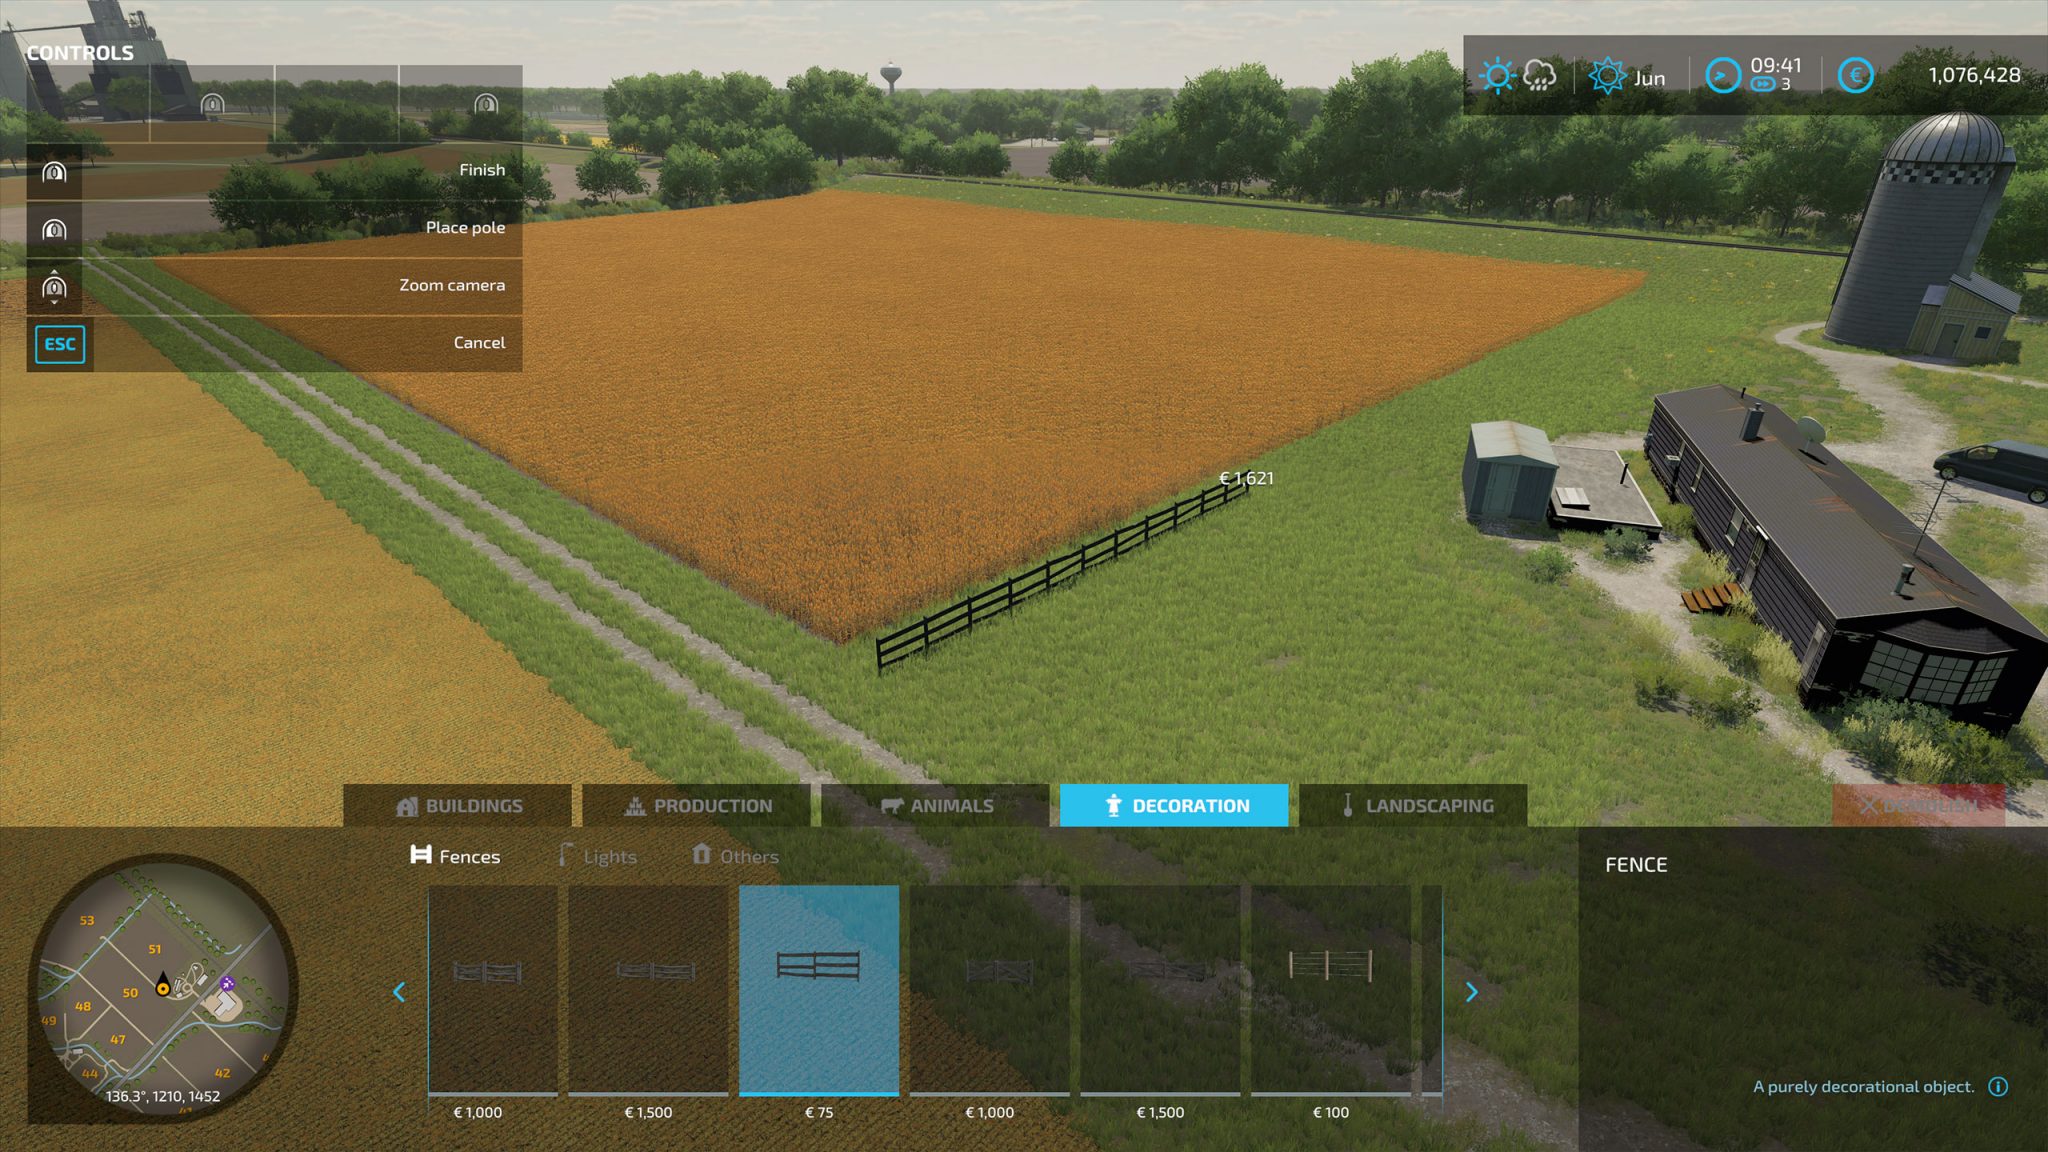 mods farming simulator 22 pc